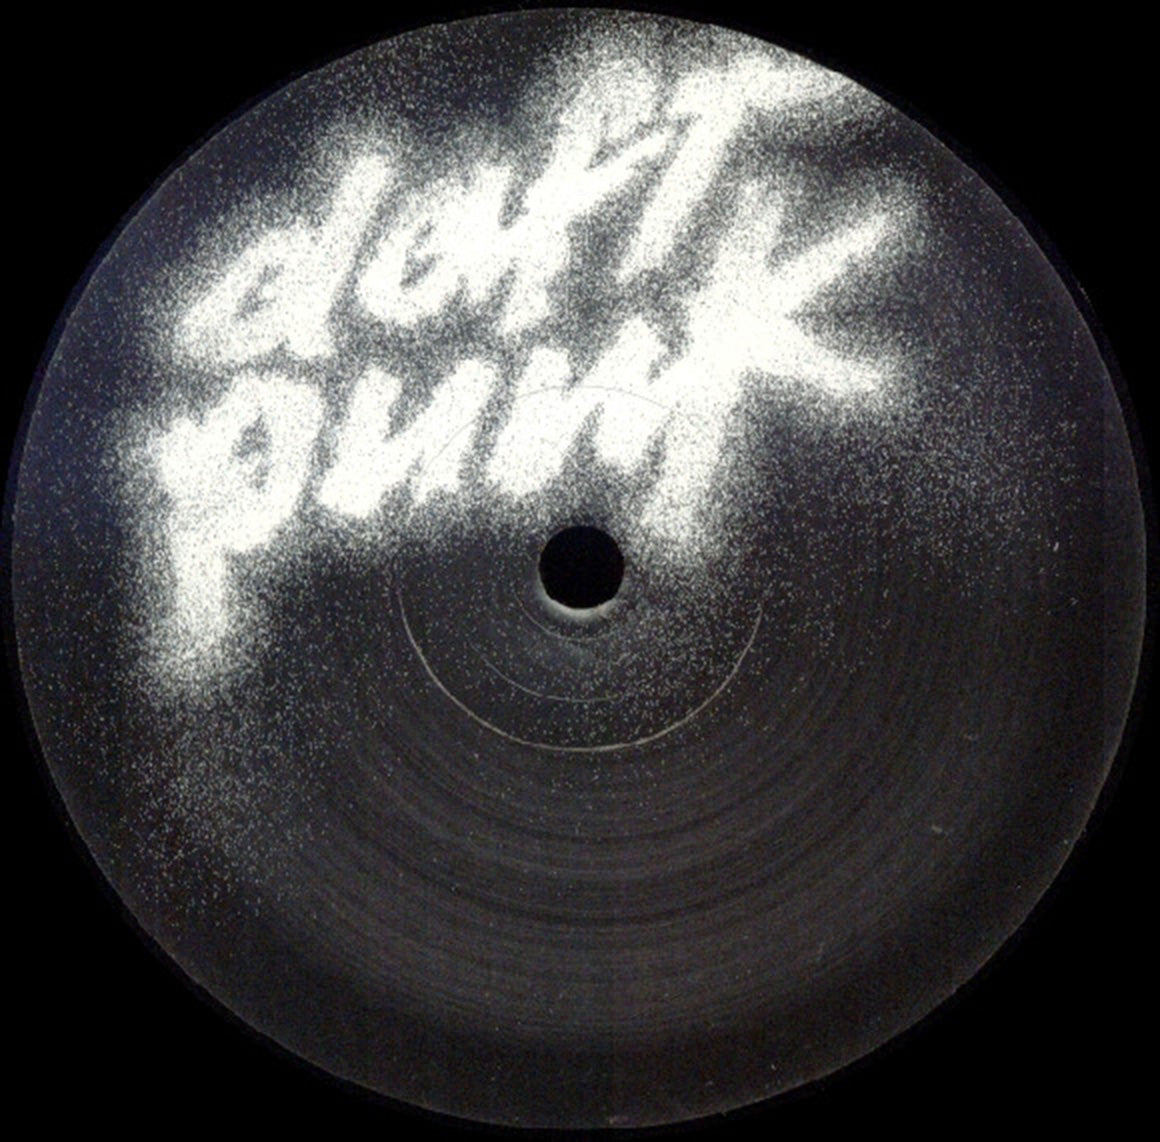 Daft Punk – Alive 1997 Europe Pressing - Sealed!